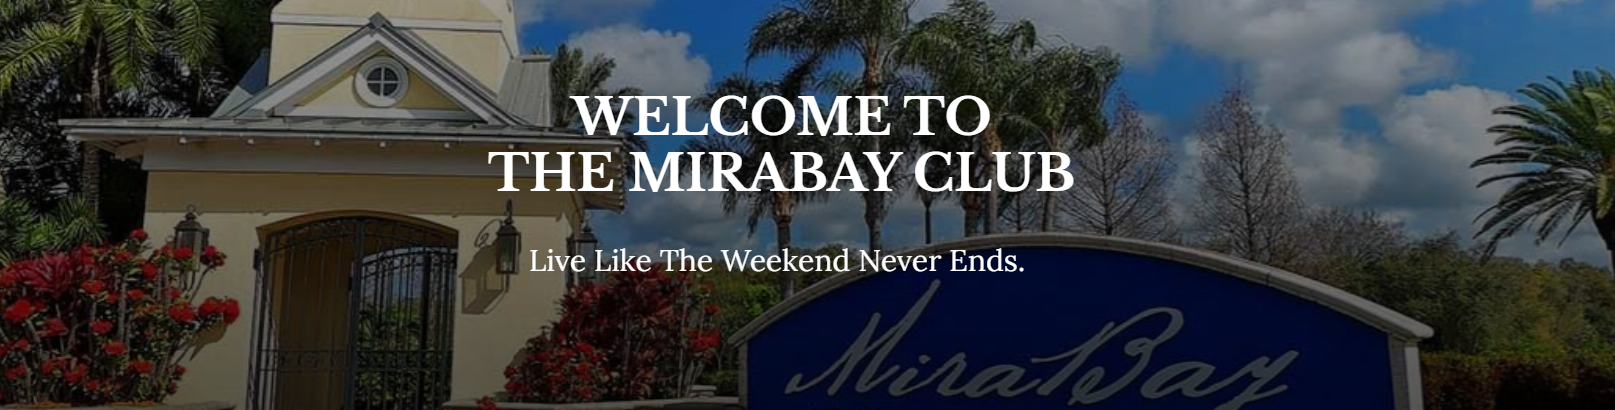 The Mirabay Club